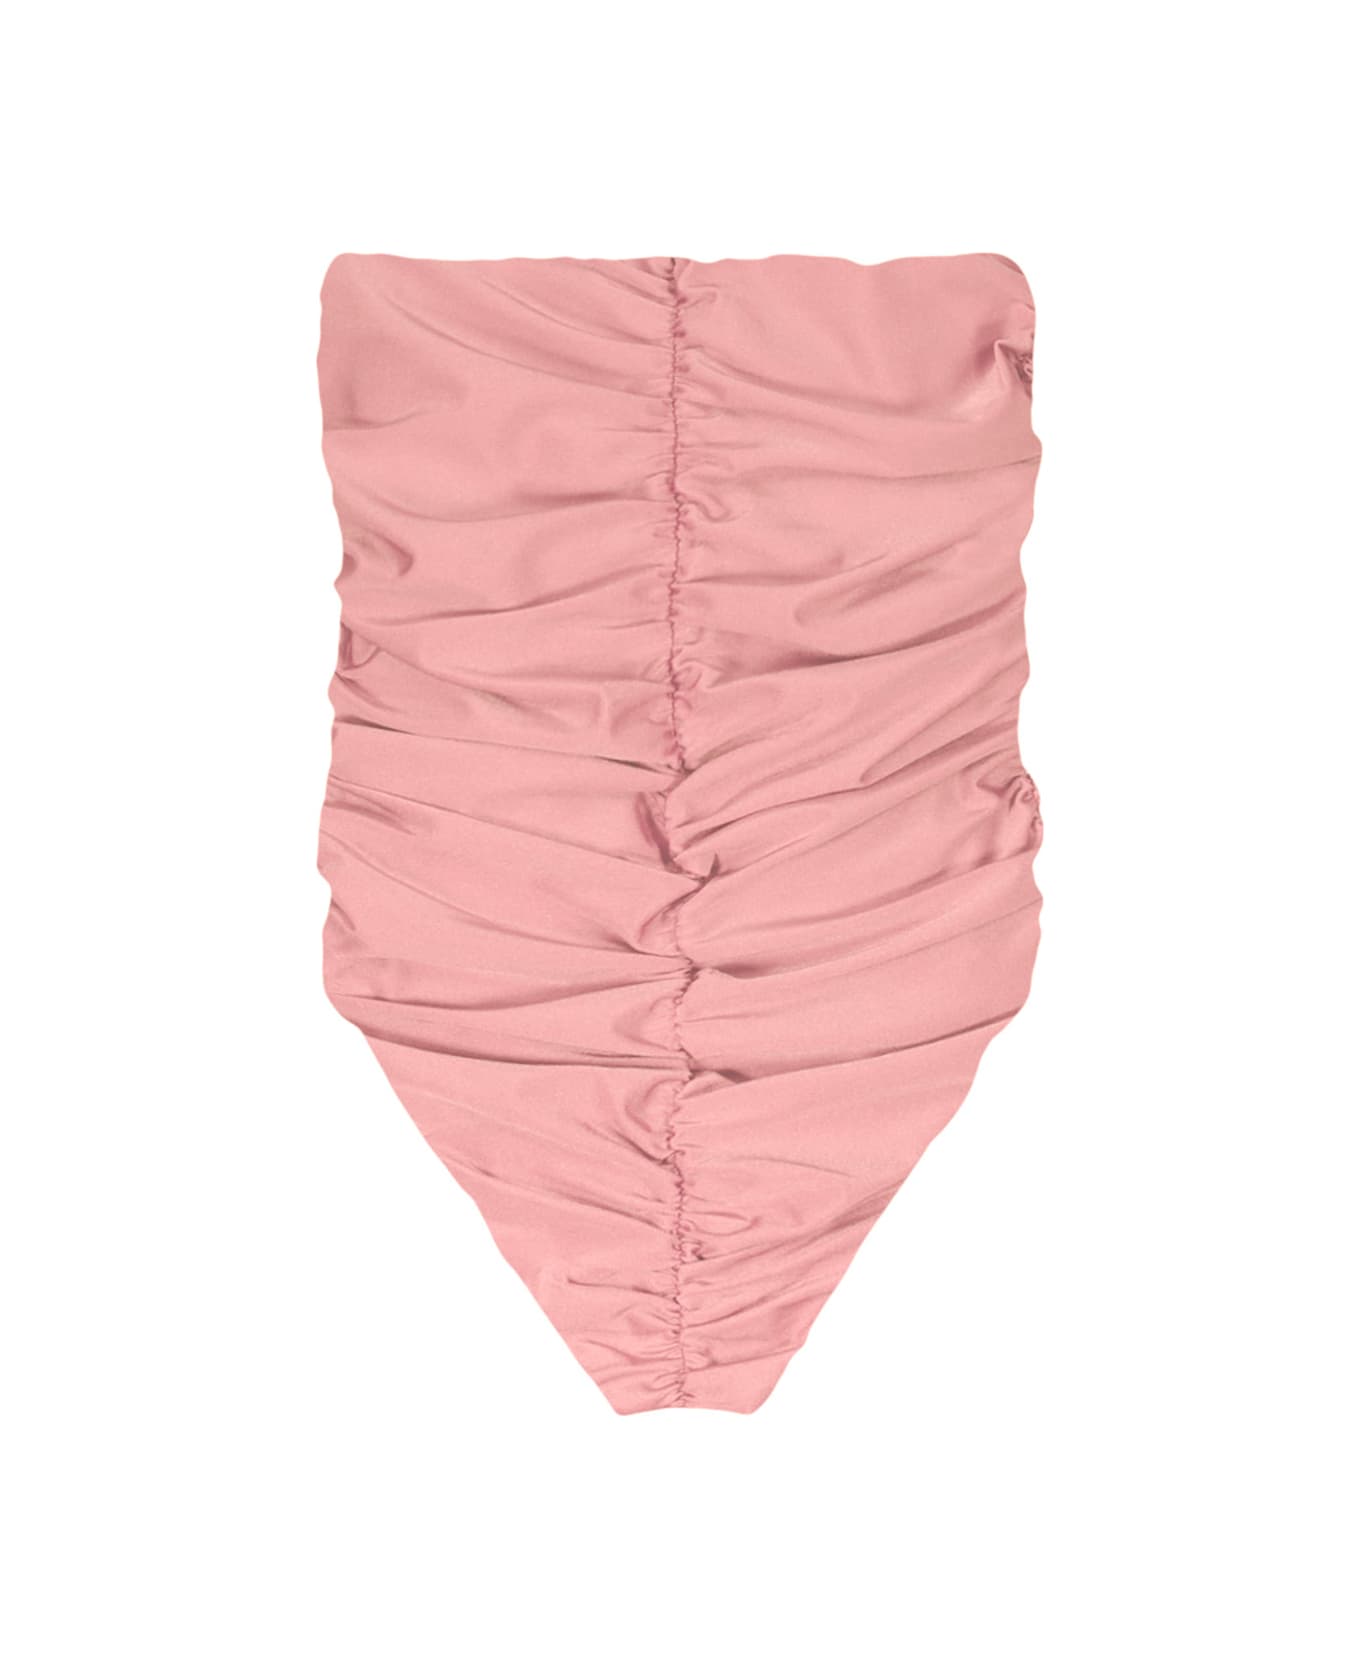 Chéri Swimsuit - Pink